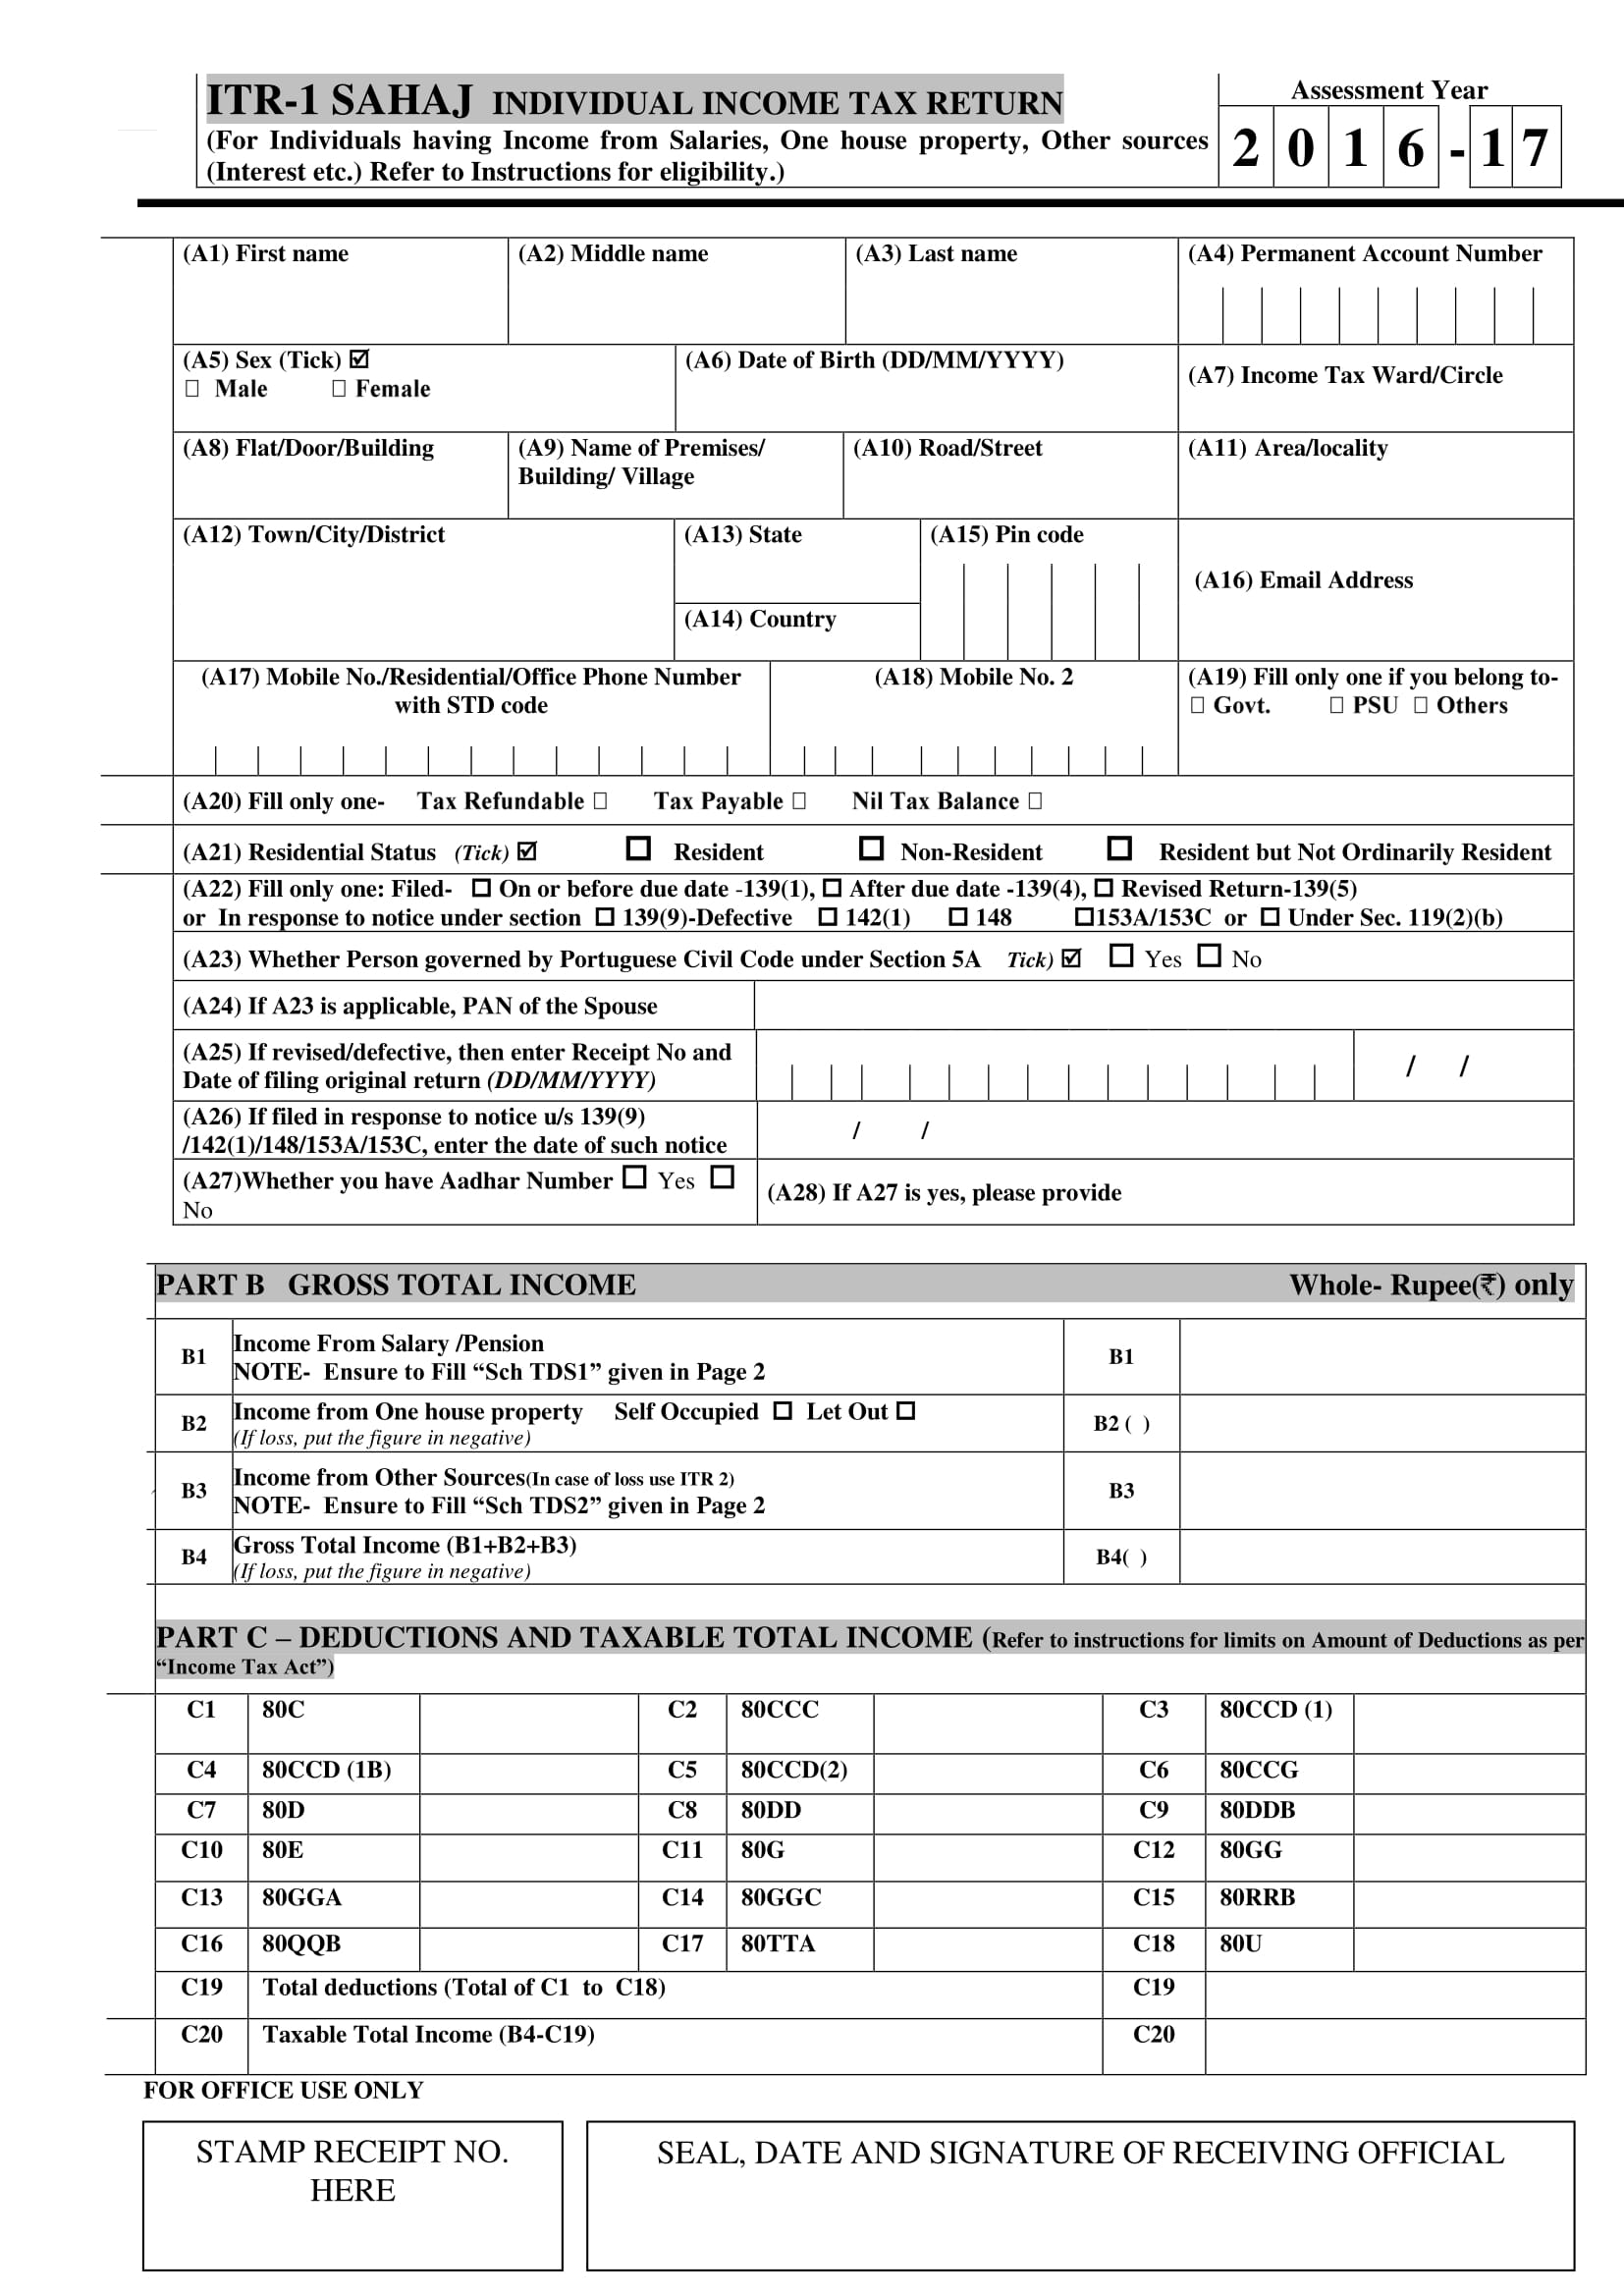 income tax return verification form 1